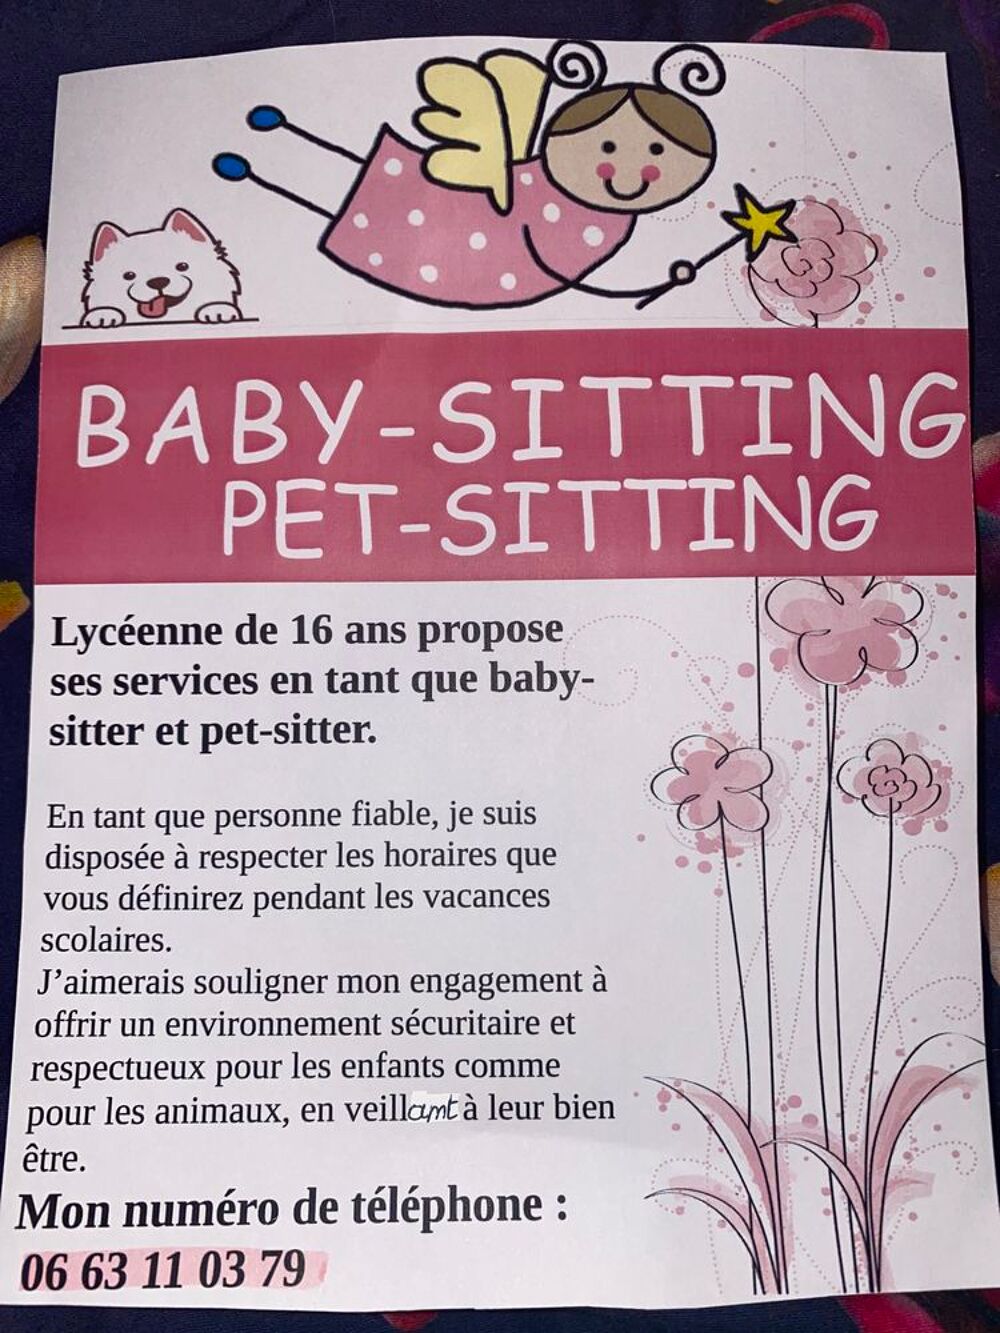   Baby-sitting et Pet-sitting  